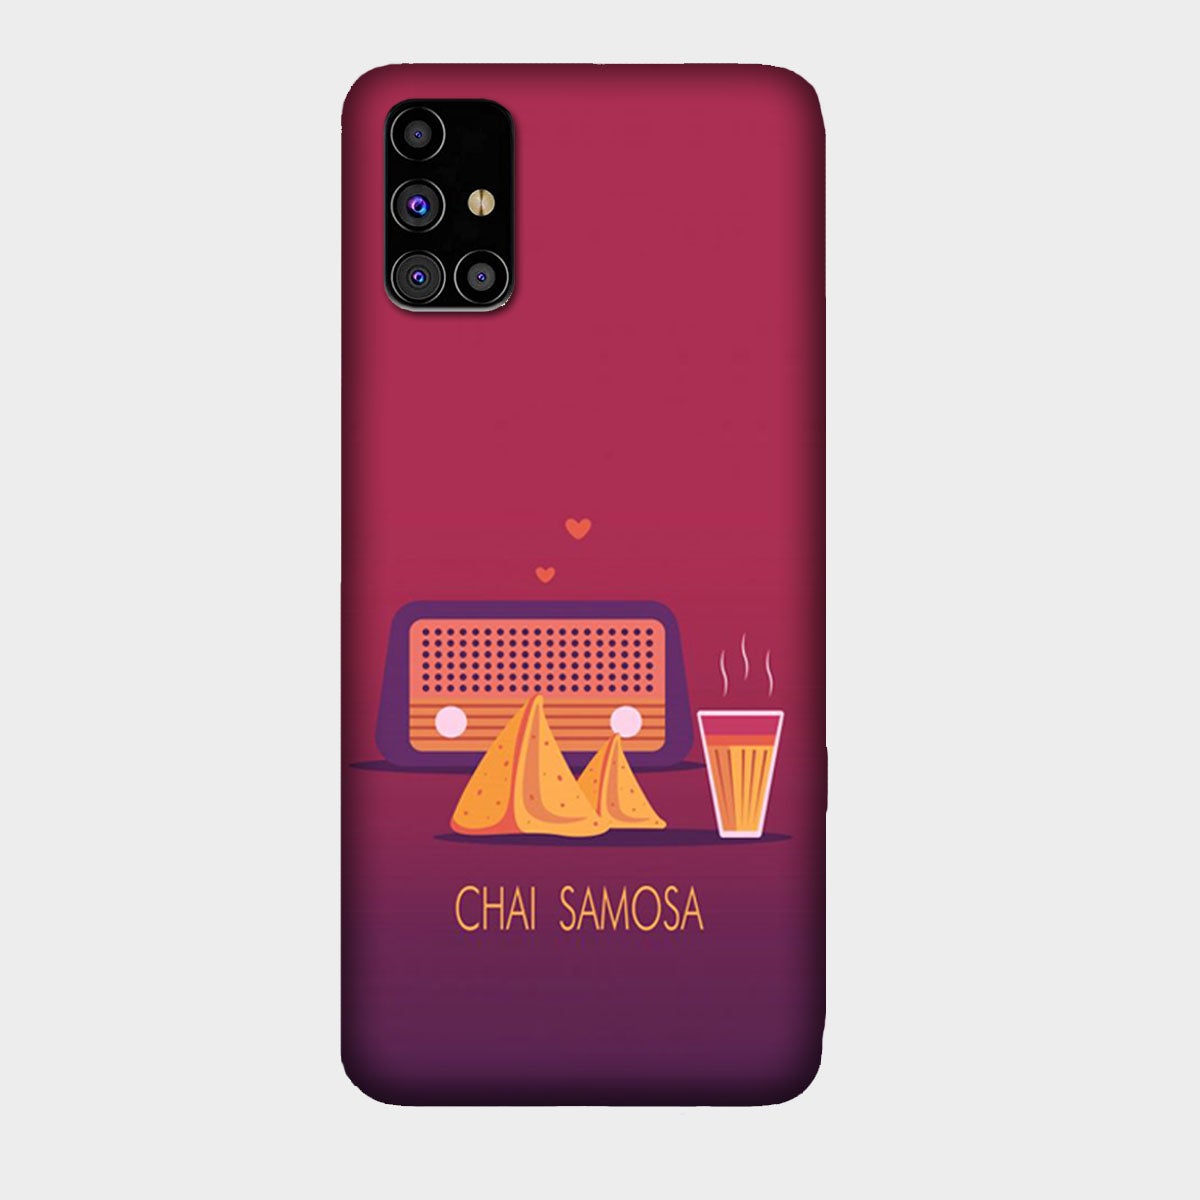 Chai Samosa - Mobile Phone Cover - Hard Case - Samsung - Samsung